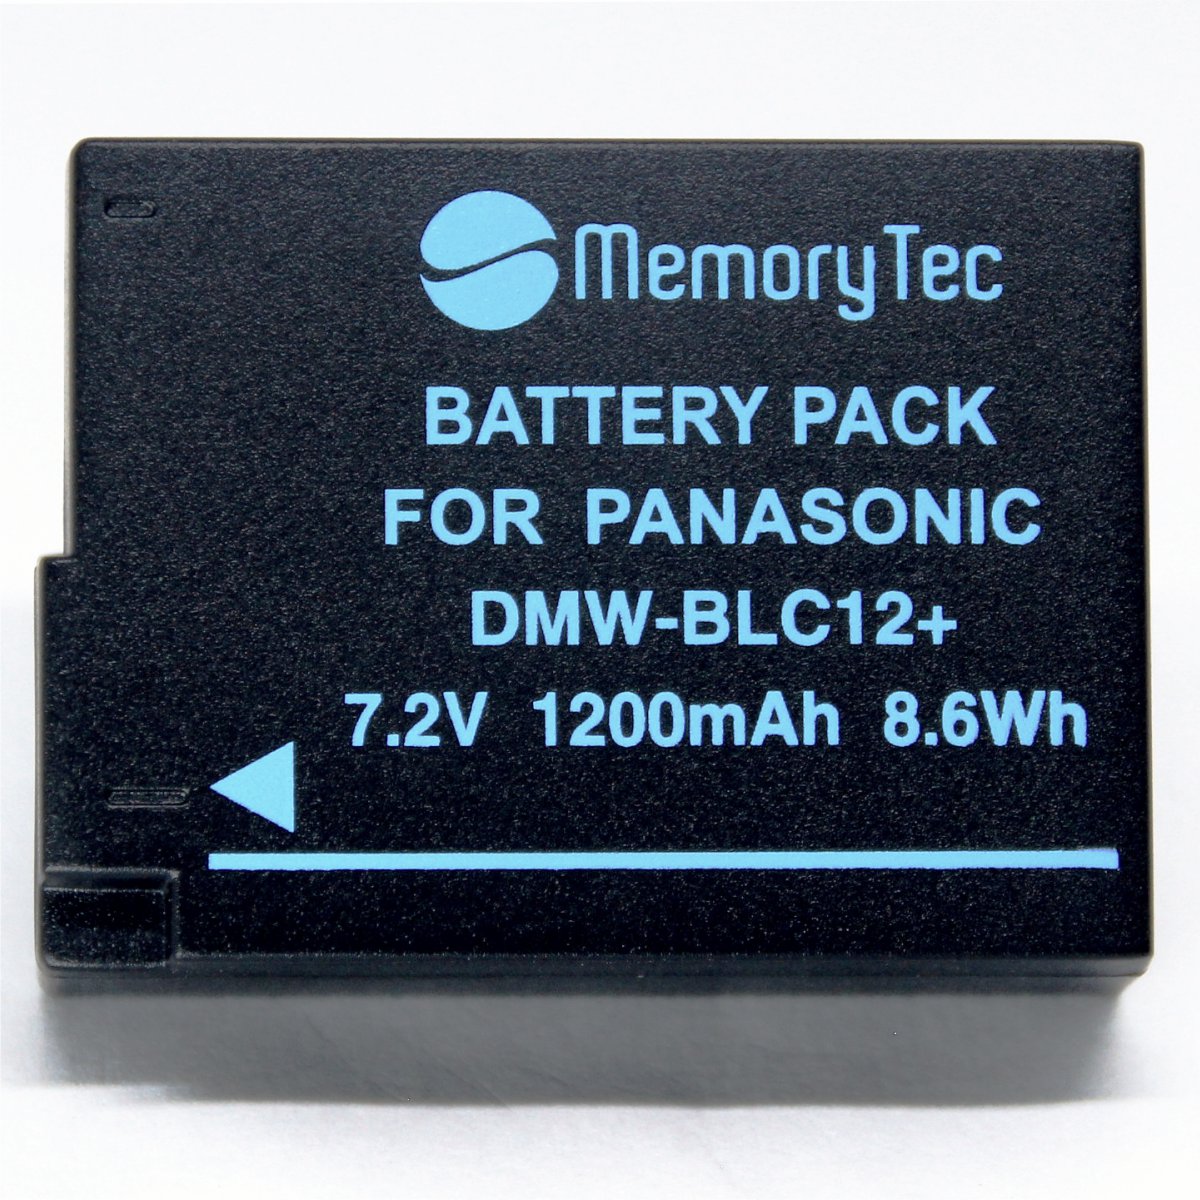 Bateria DMW-BLC12 para Panasonic Lumix DMC-G85, DMC-FZ2500, DMC-GX8, DMC-G7, DMC-G6K